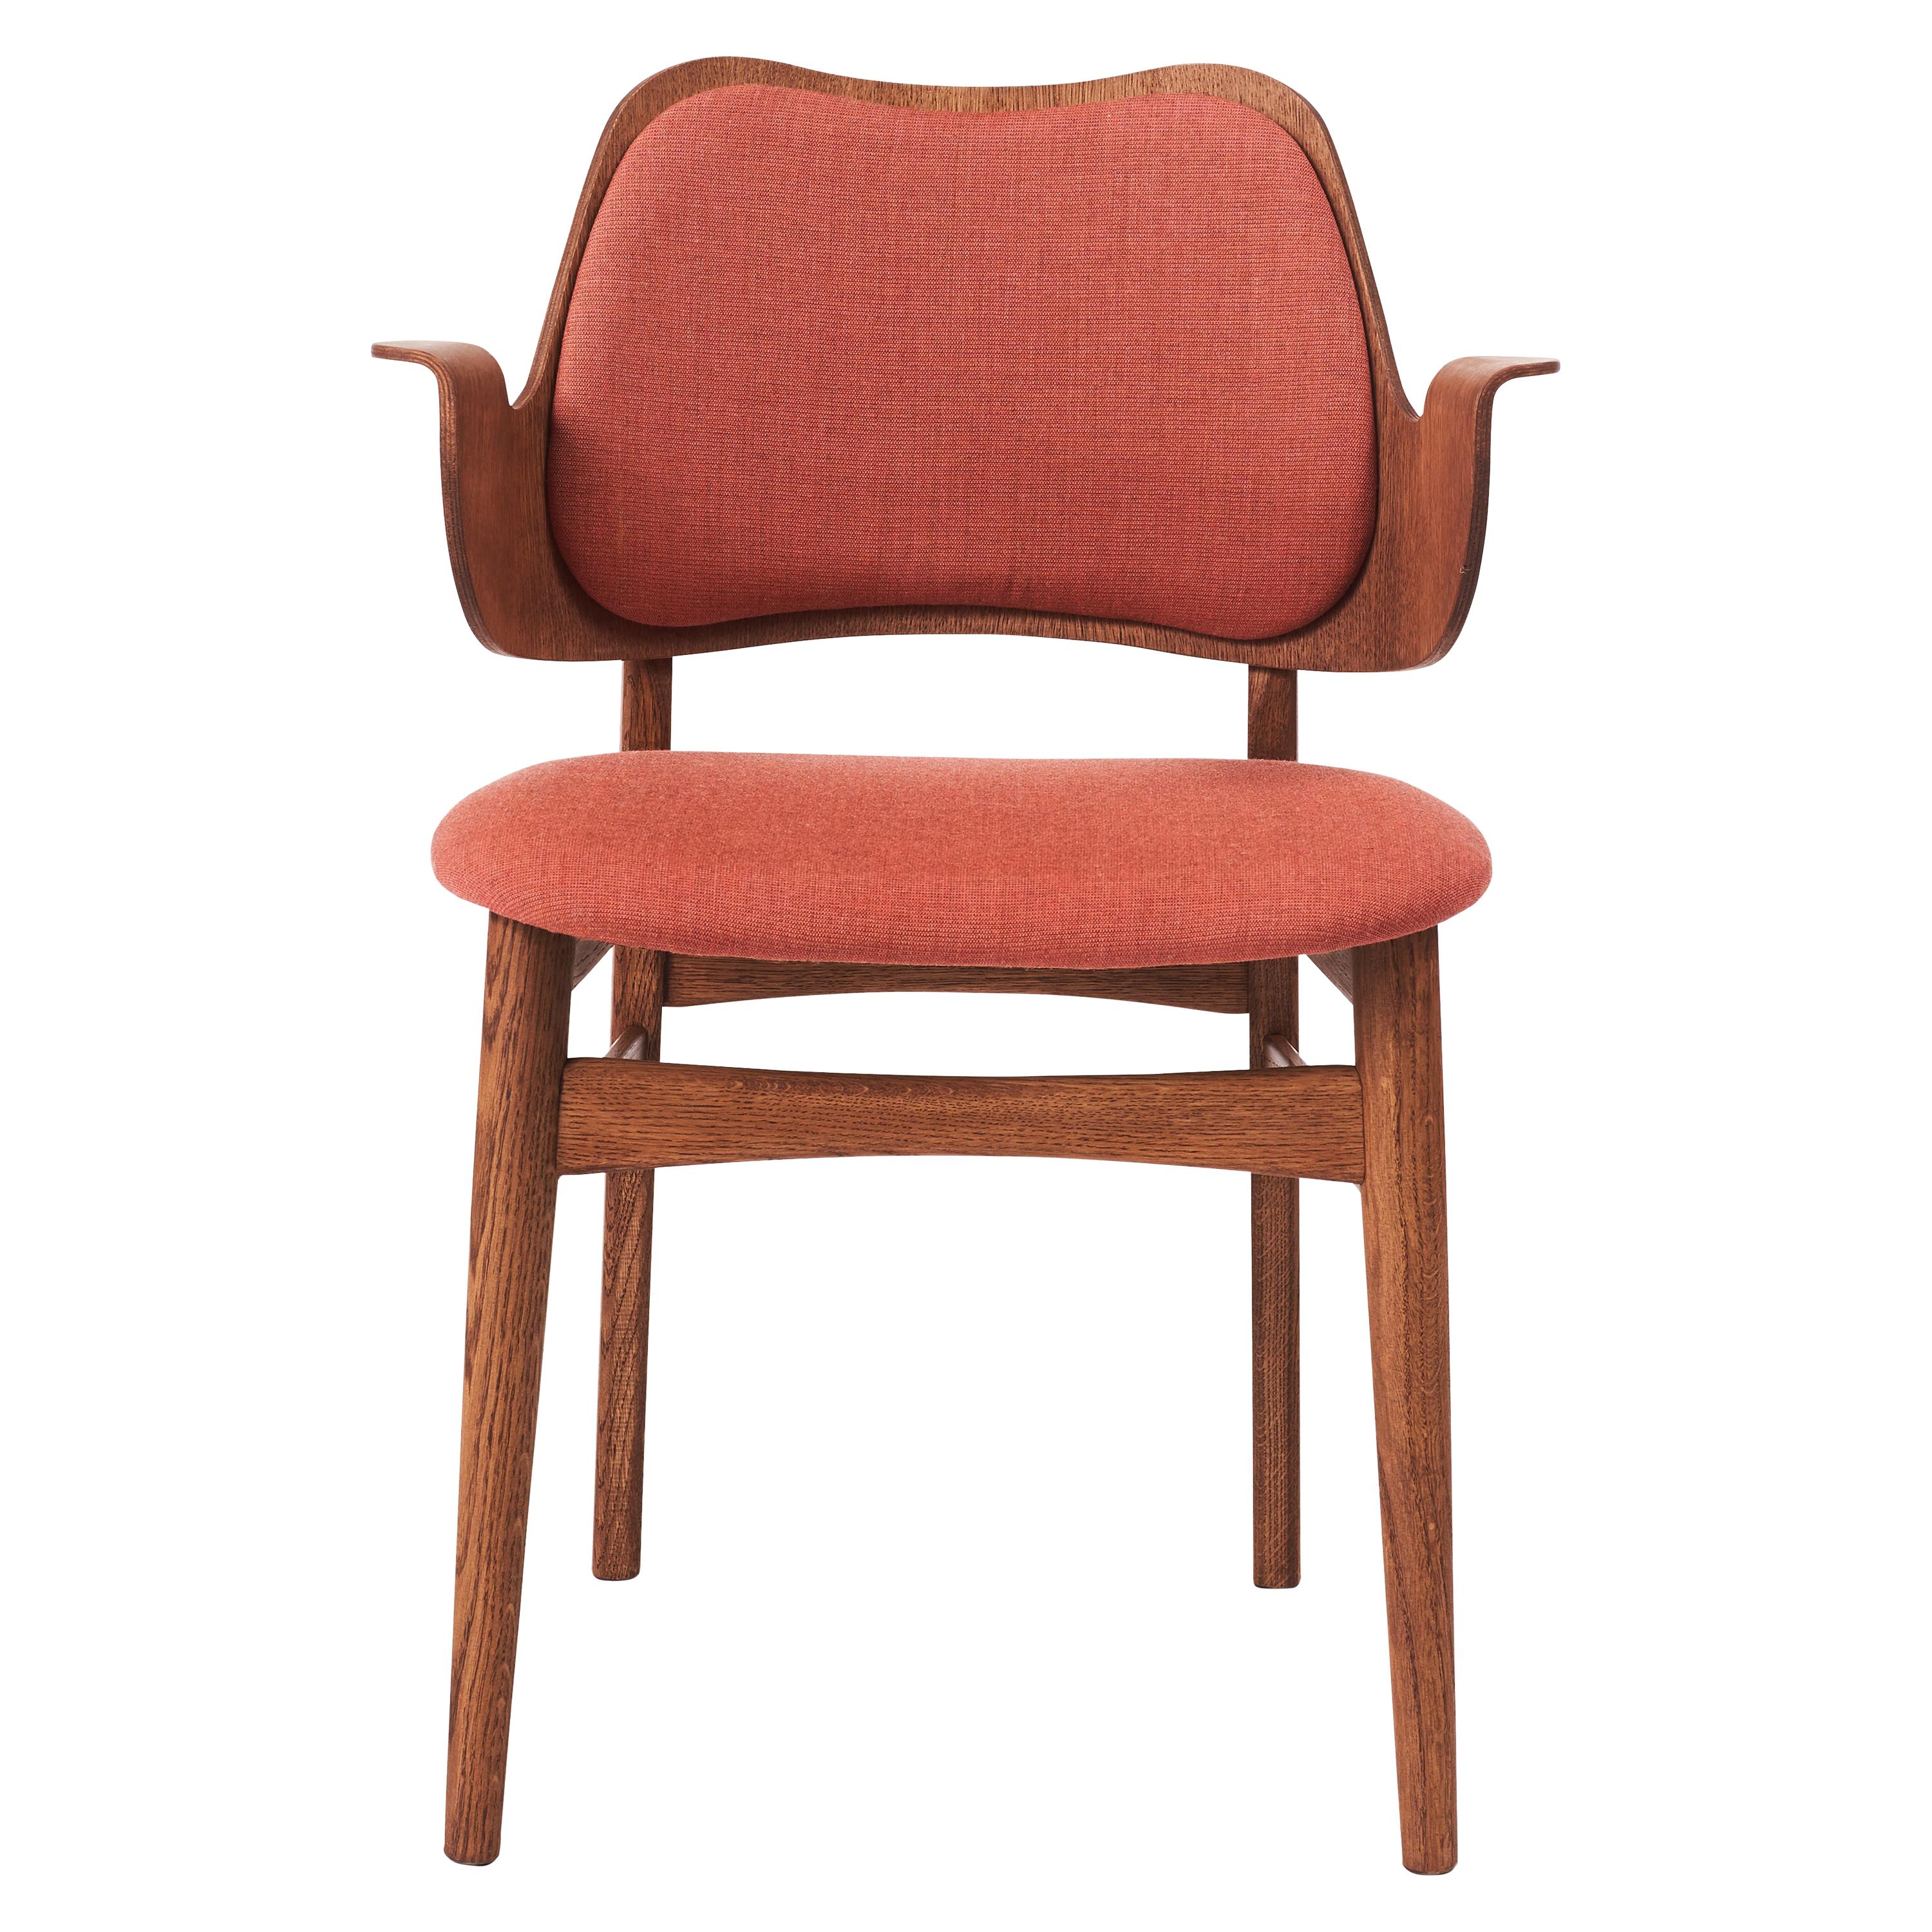 Warm Nordic Gesture Monochrome Fully Upholstered Chair in Teak Oak, Hans Olsen